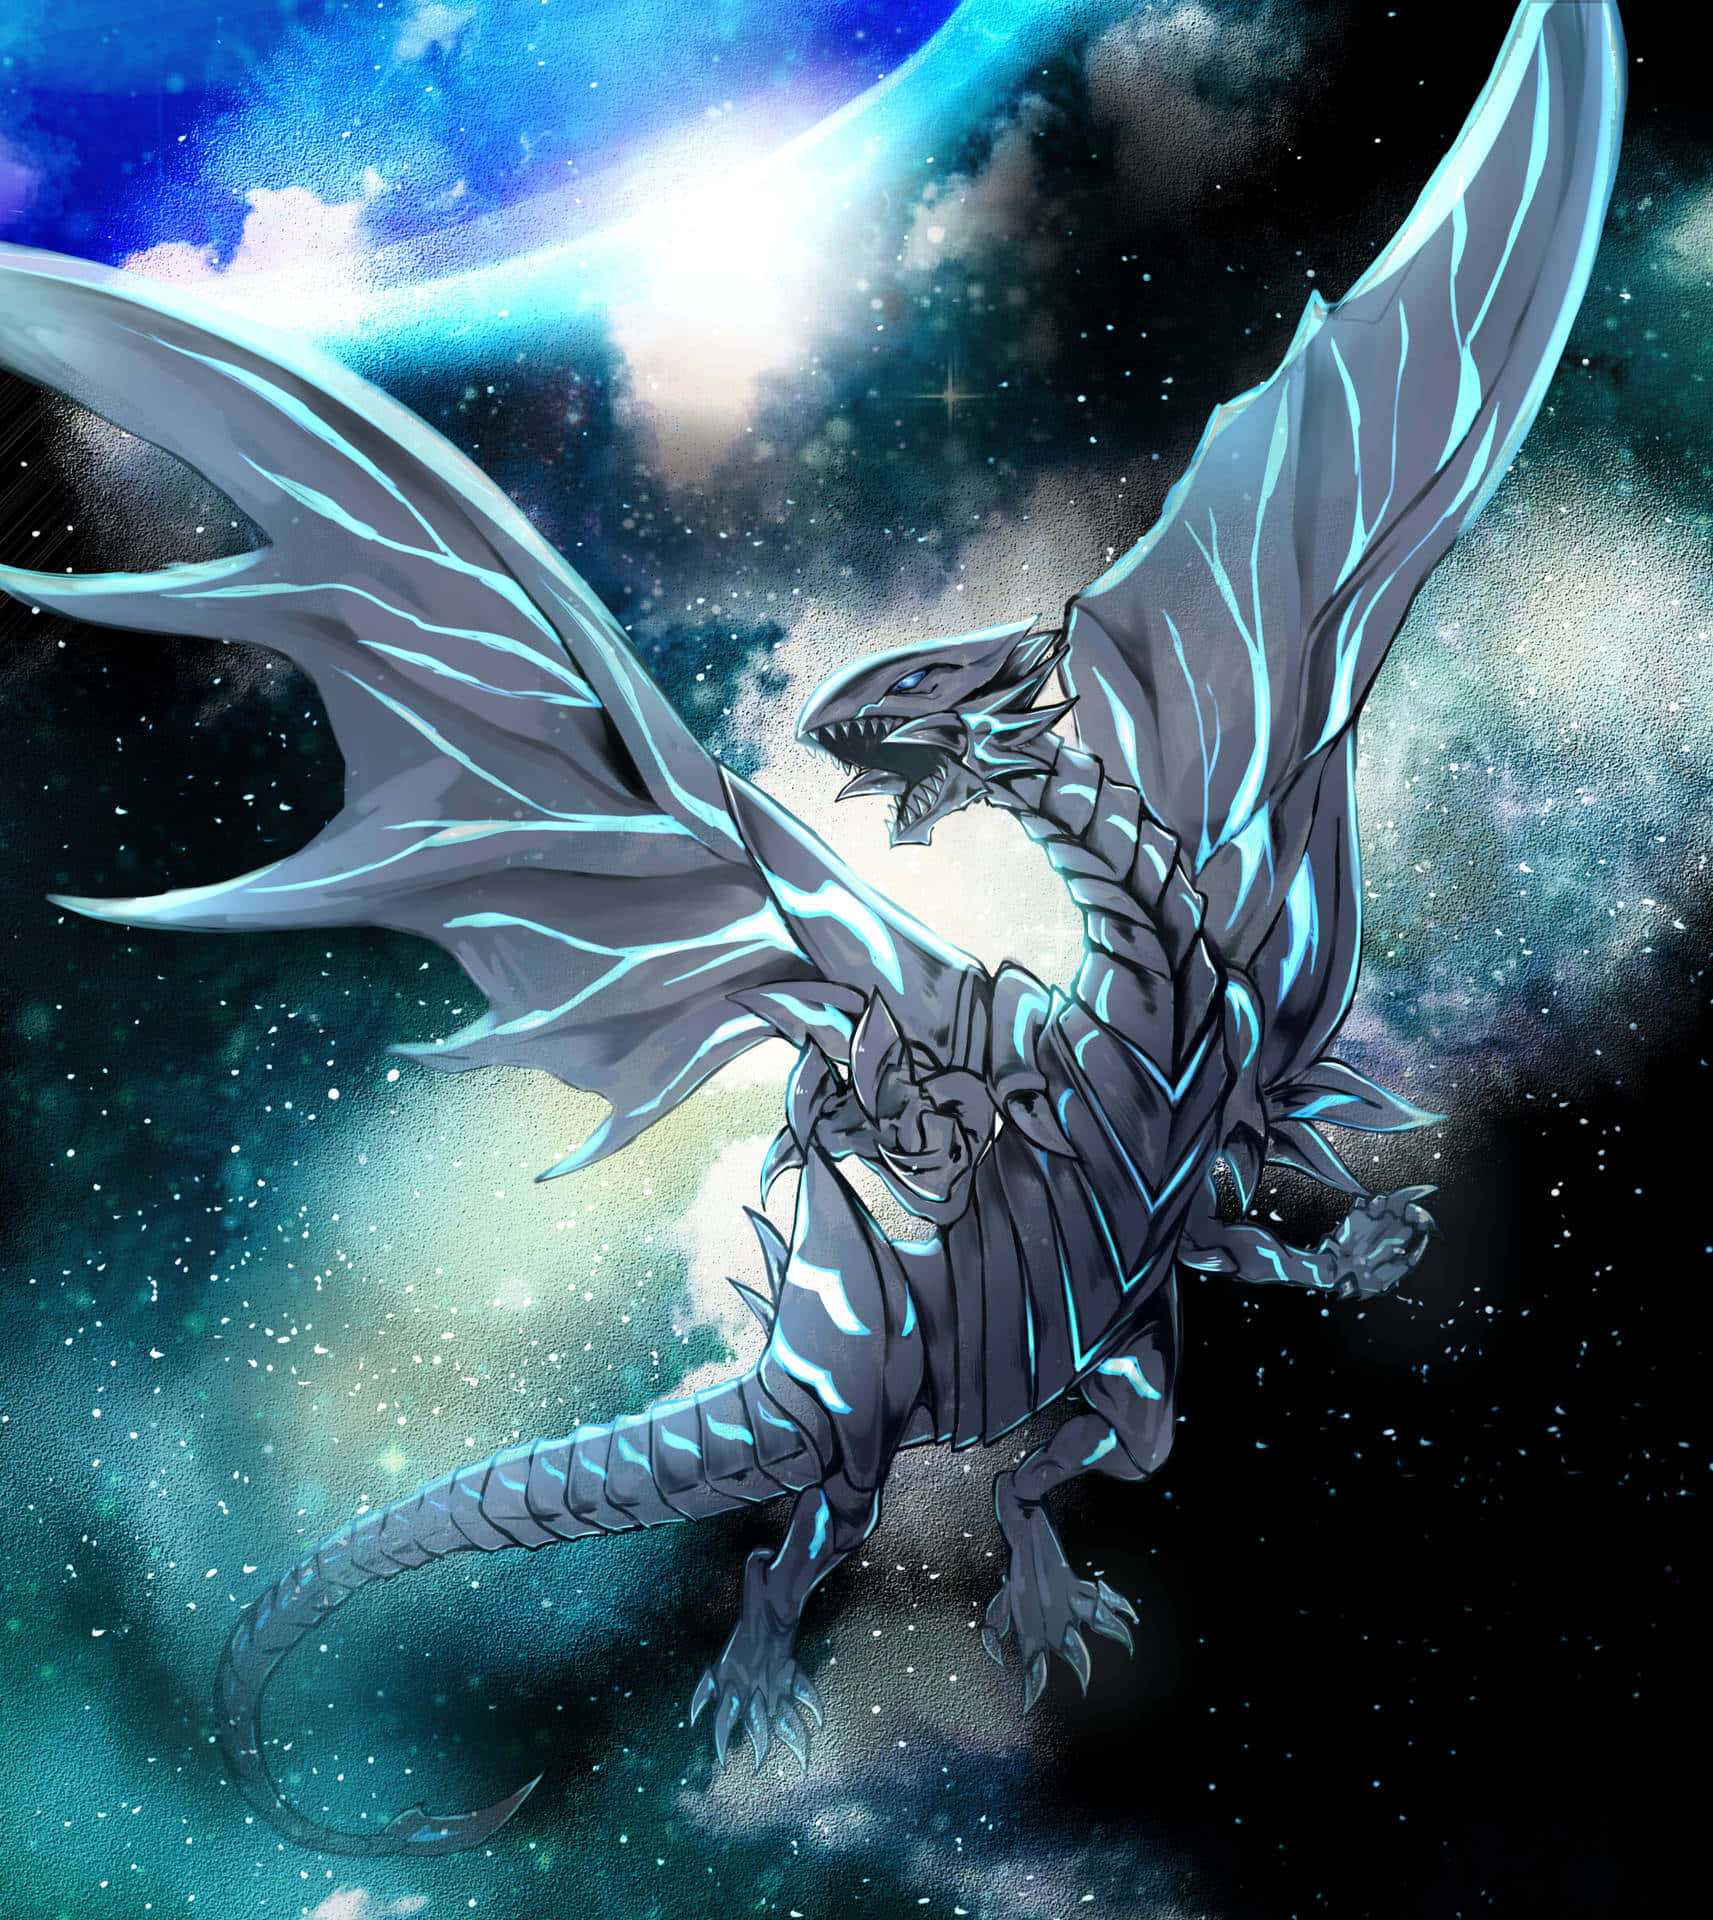 Majestic Yu-Gi-Oh! Dragons in Battle Wallpaper